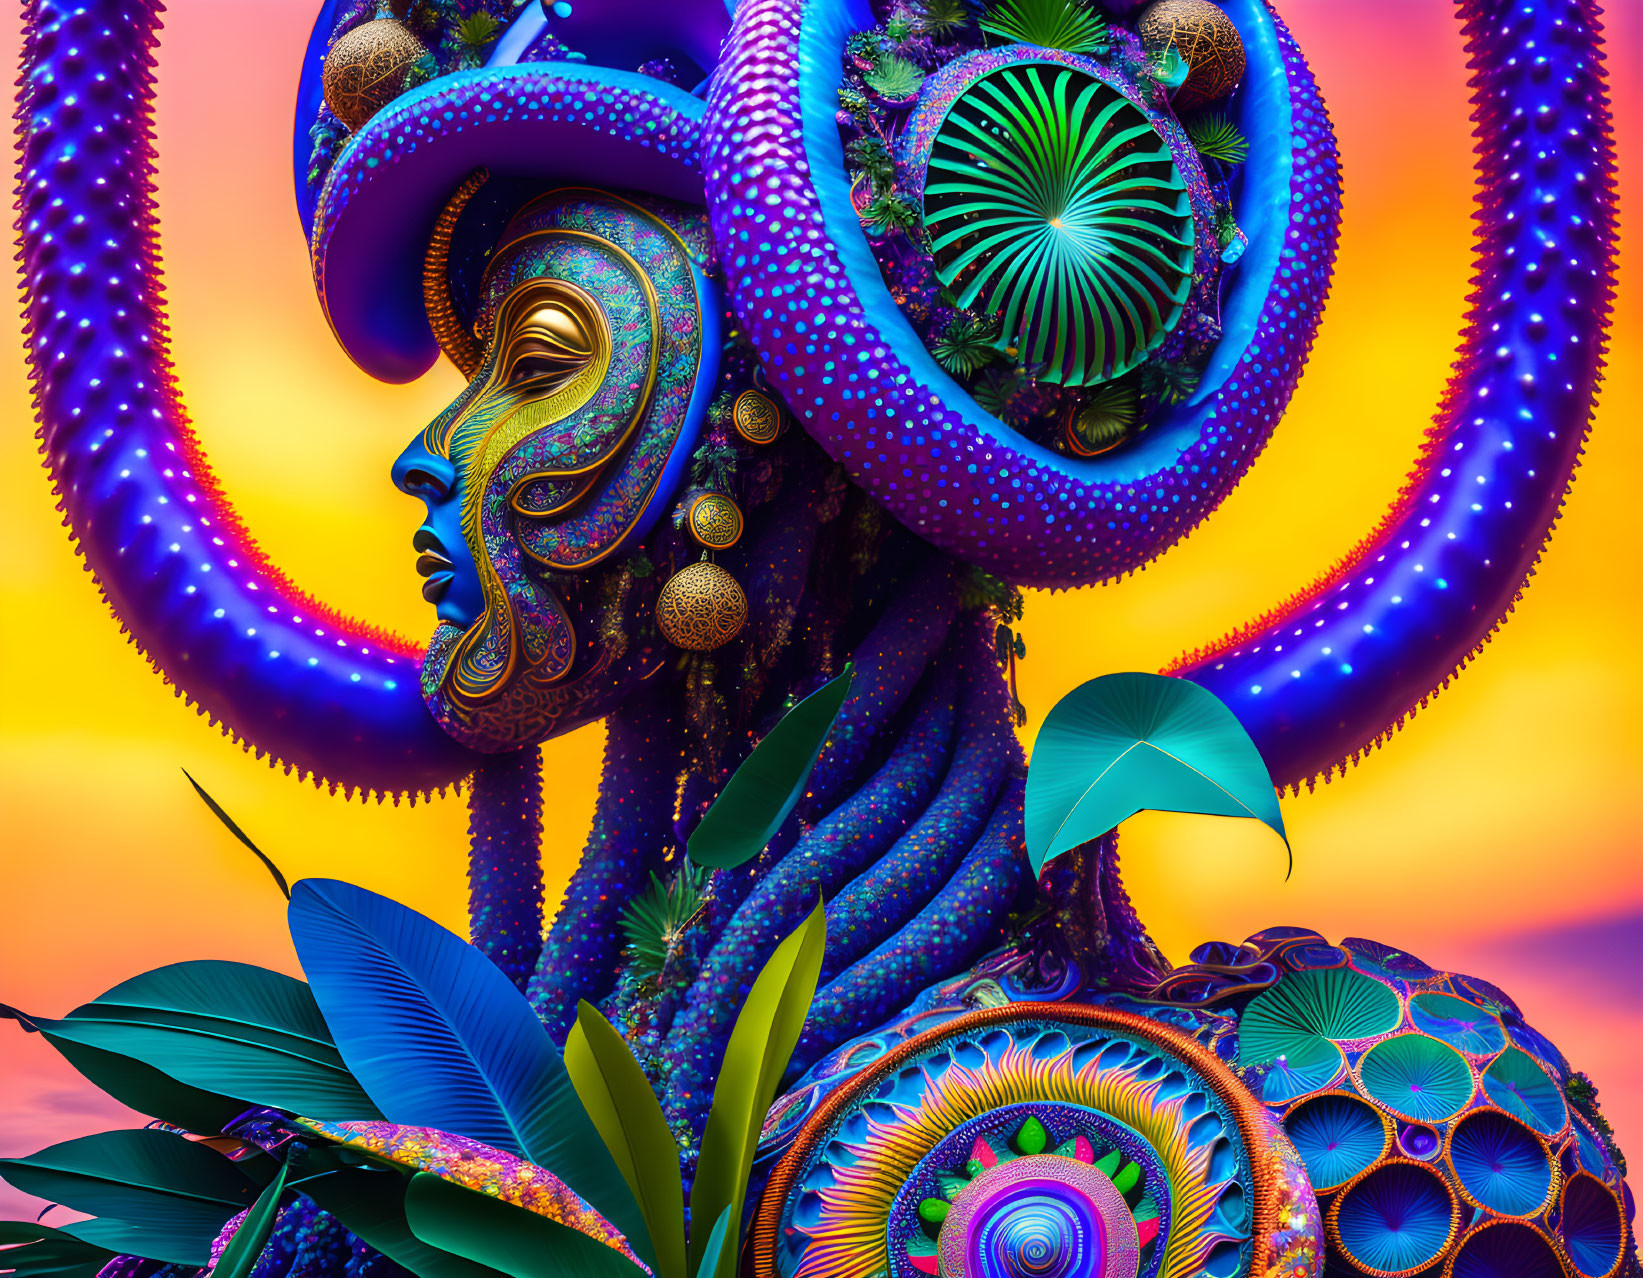 Colorful Profile View Digital Artwork with Fantastical Figure